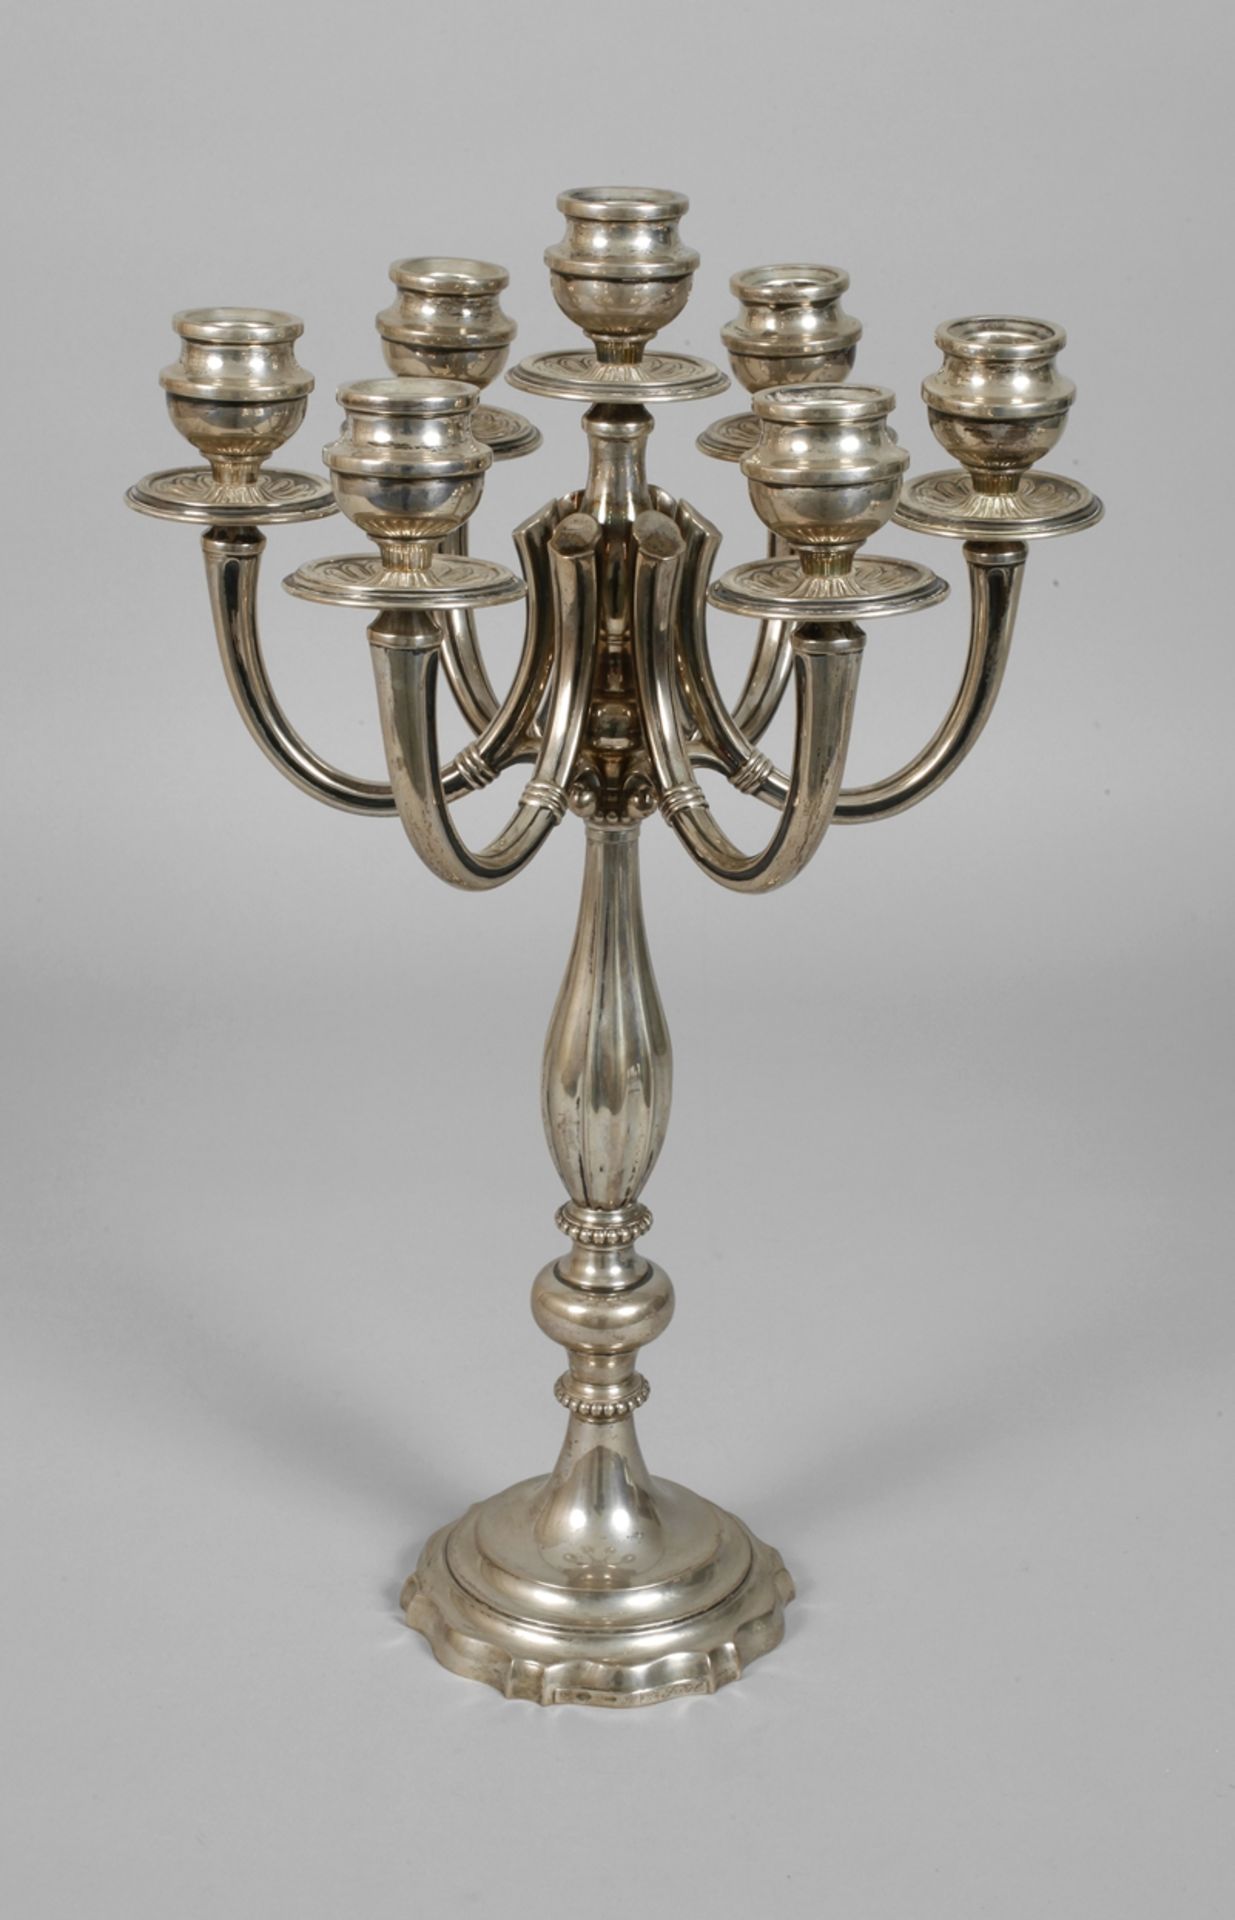 Seven-armed candelabra, silver